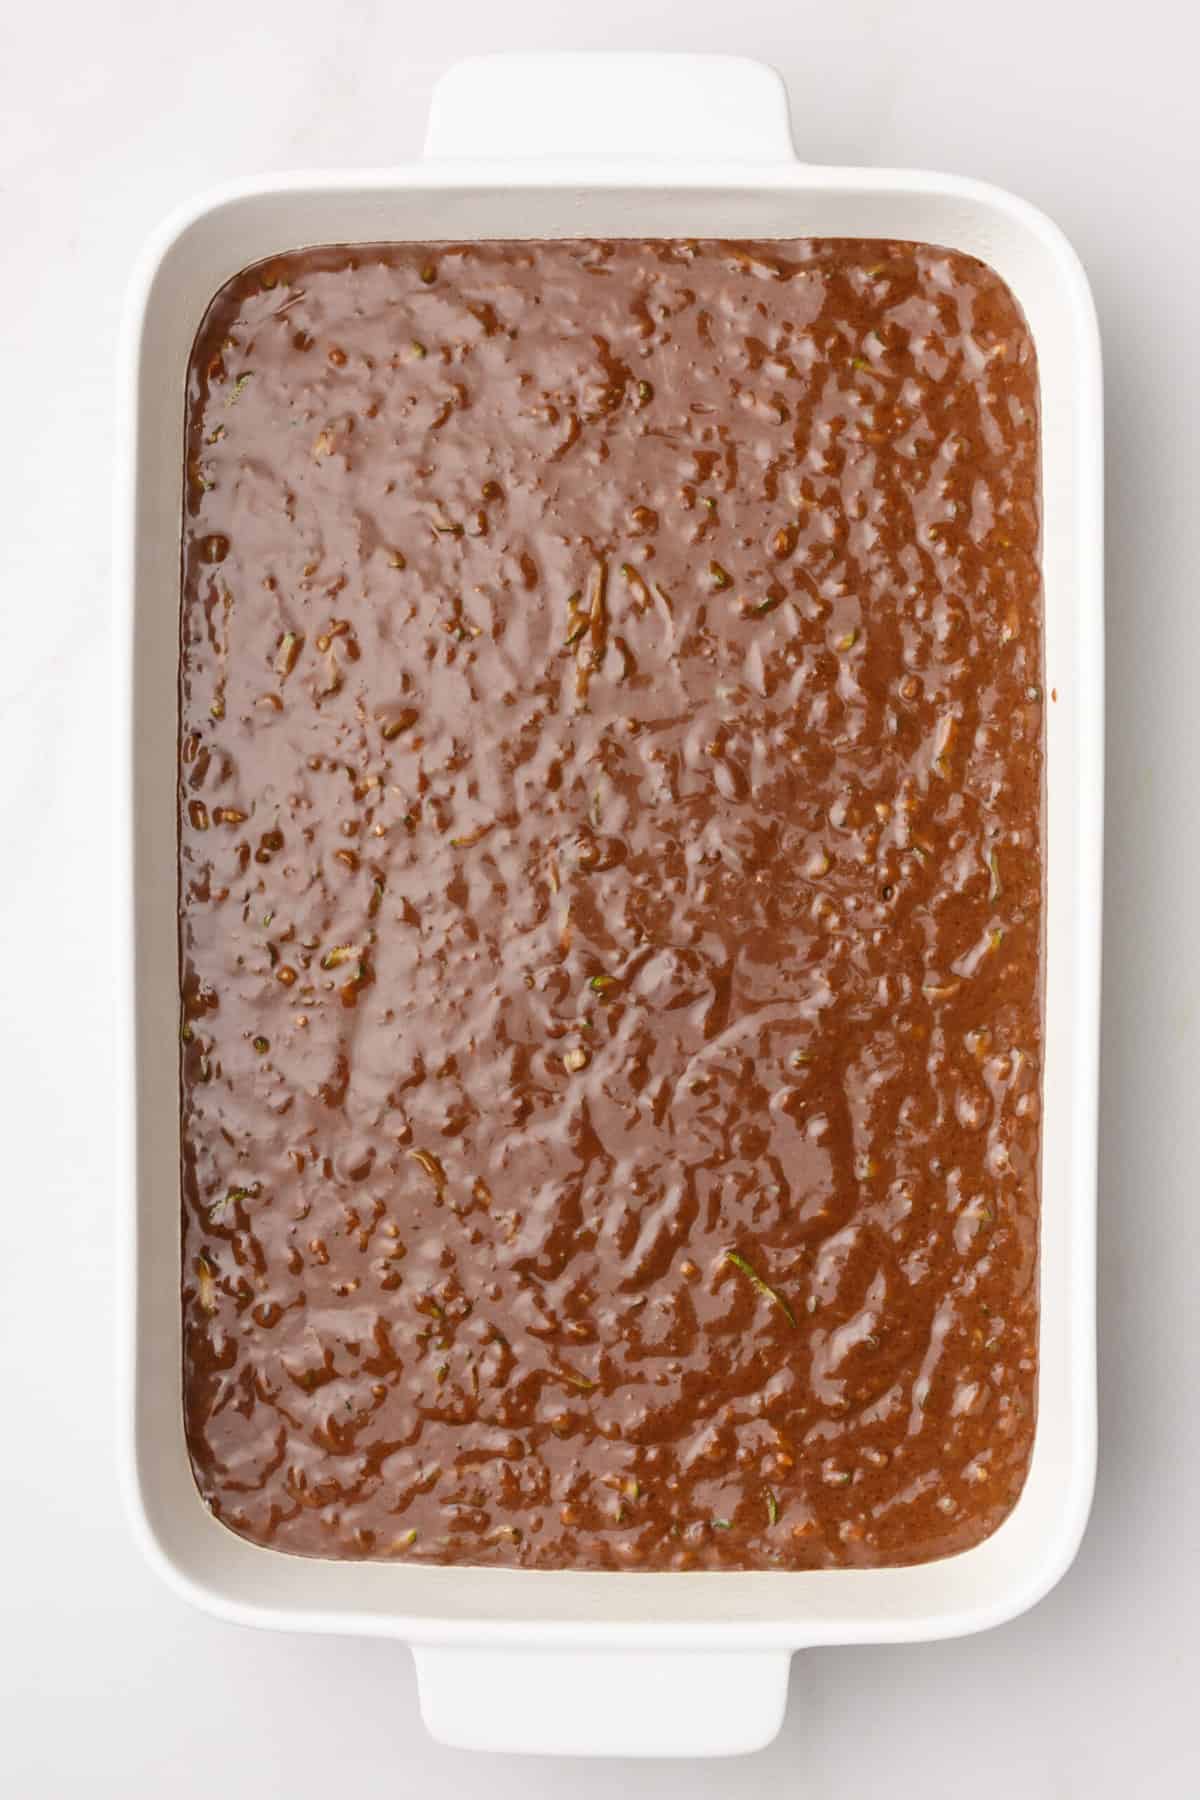 chocolate zucchini cake batter in a 9x13 baking dish